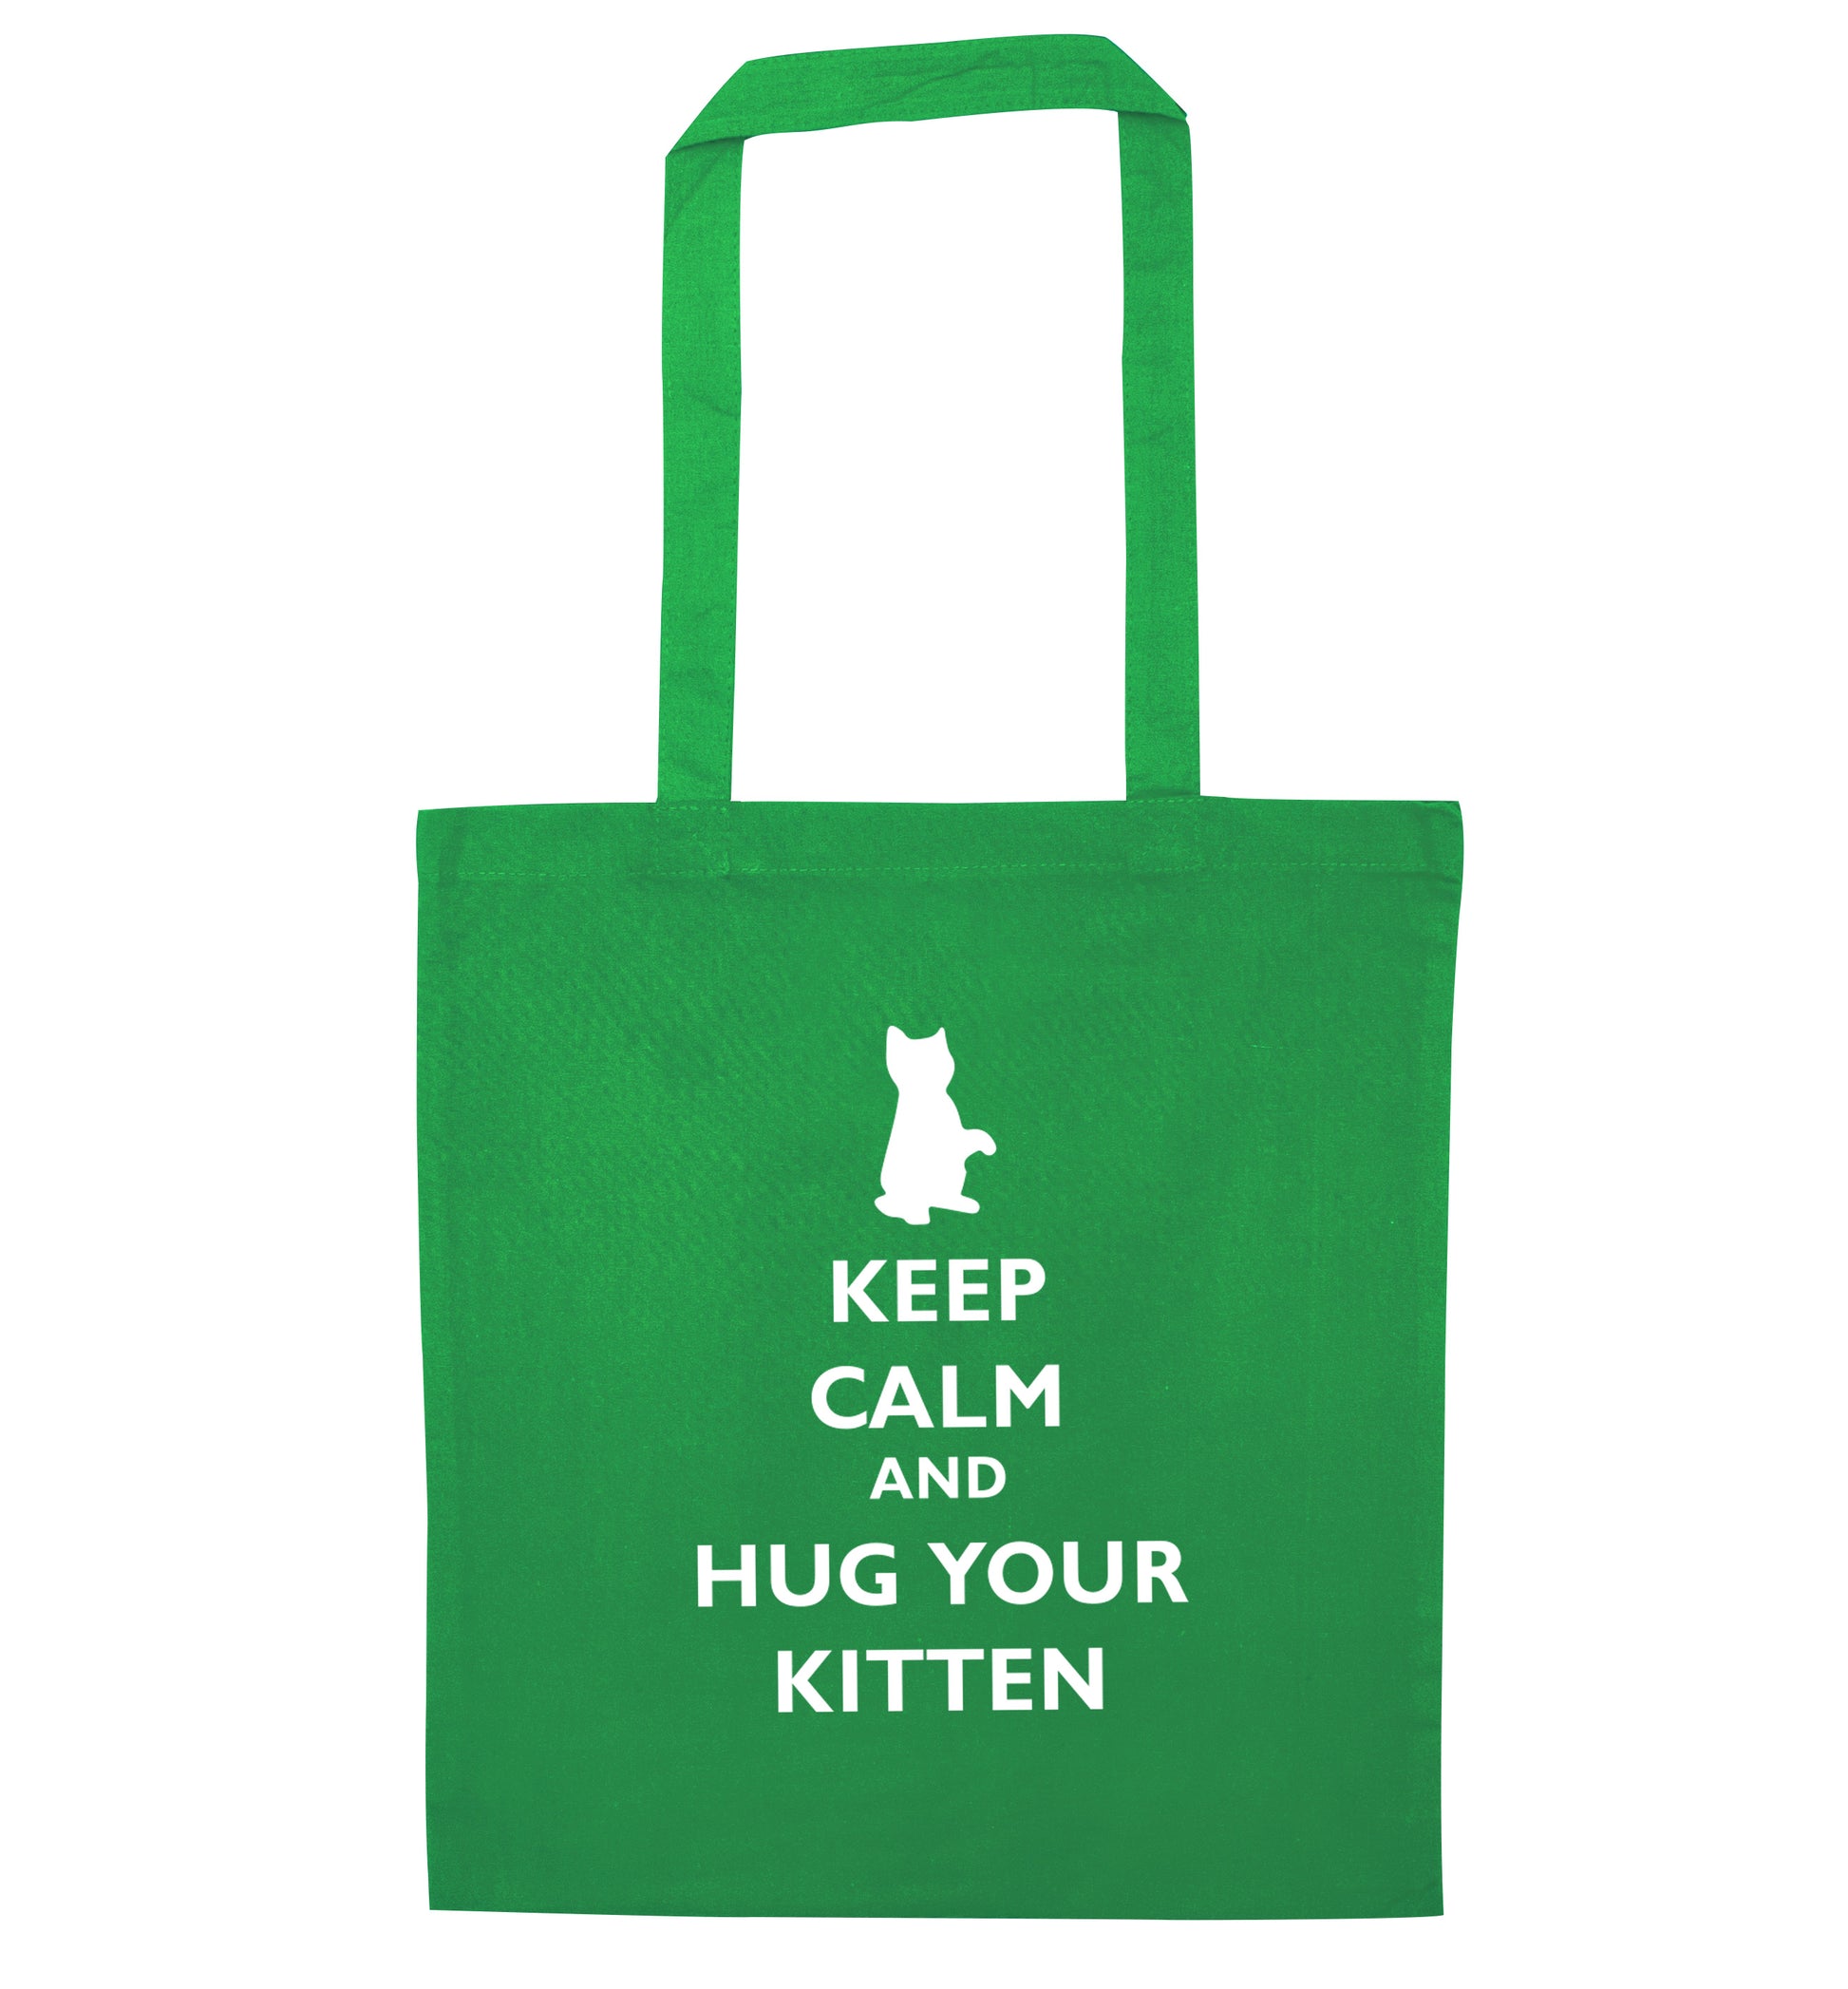 Keep calm and hug your kitten green tote bag